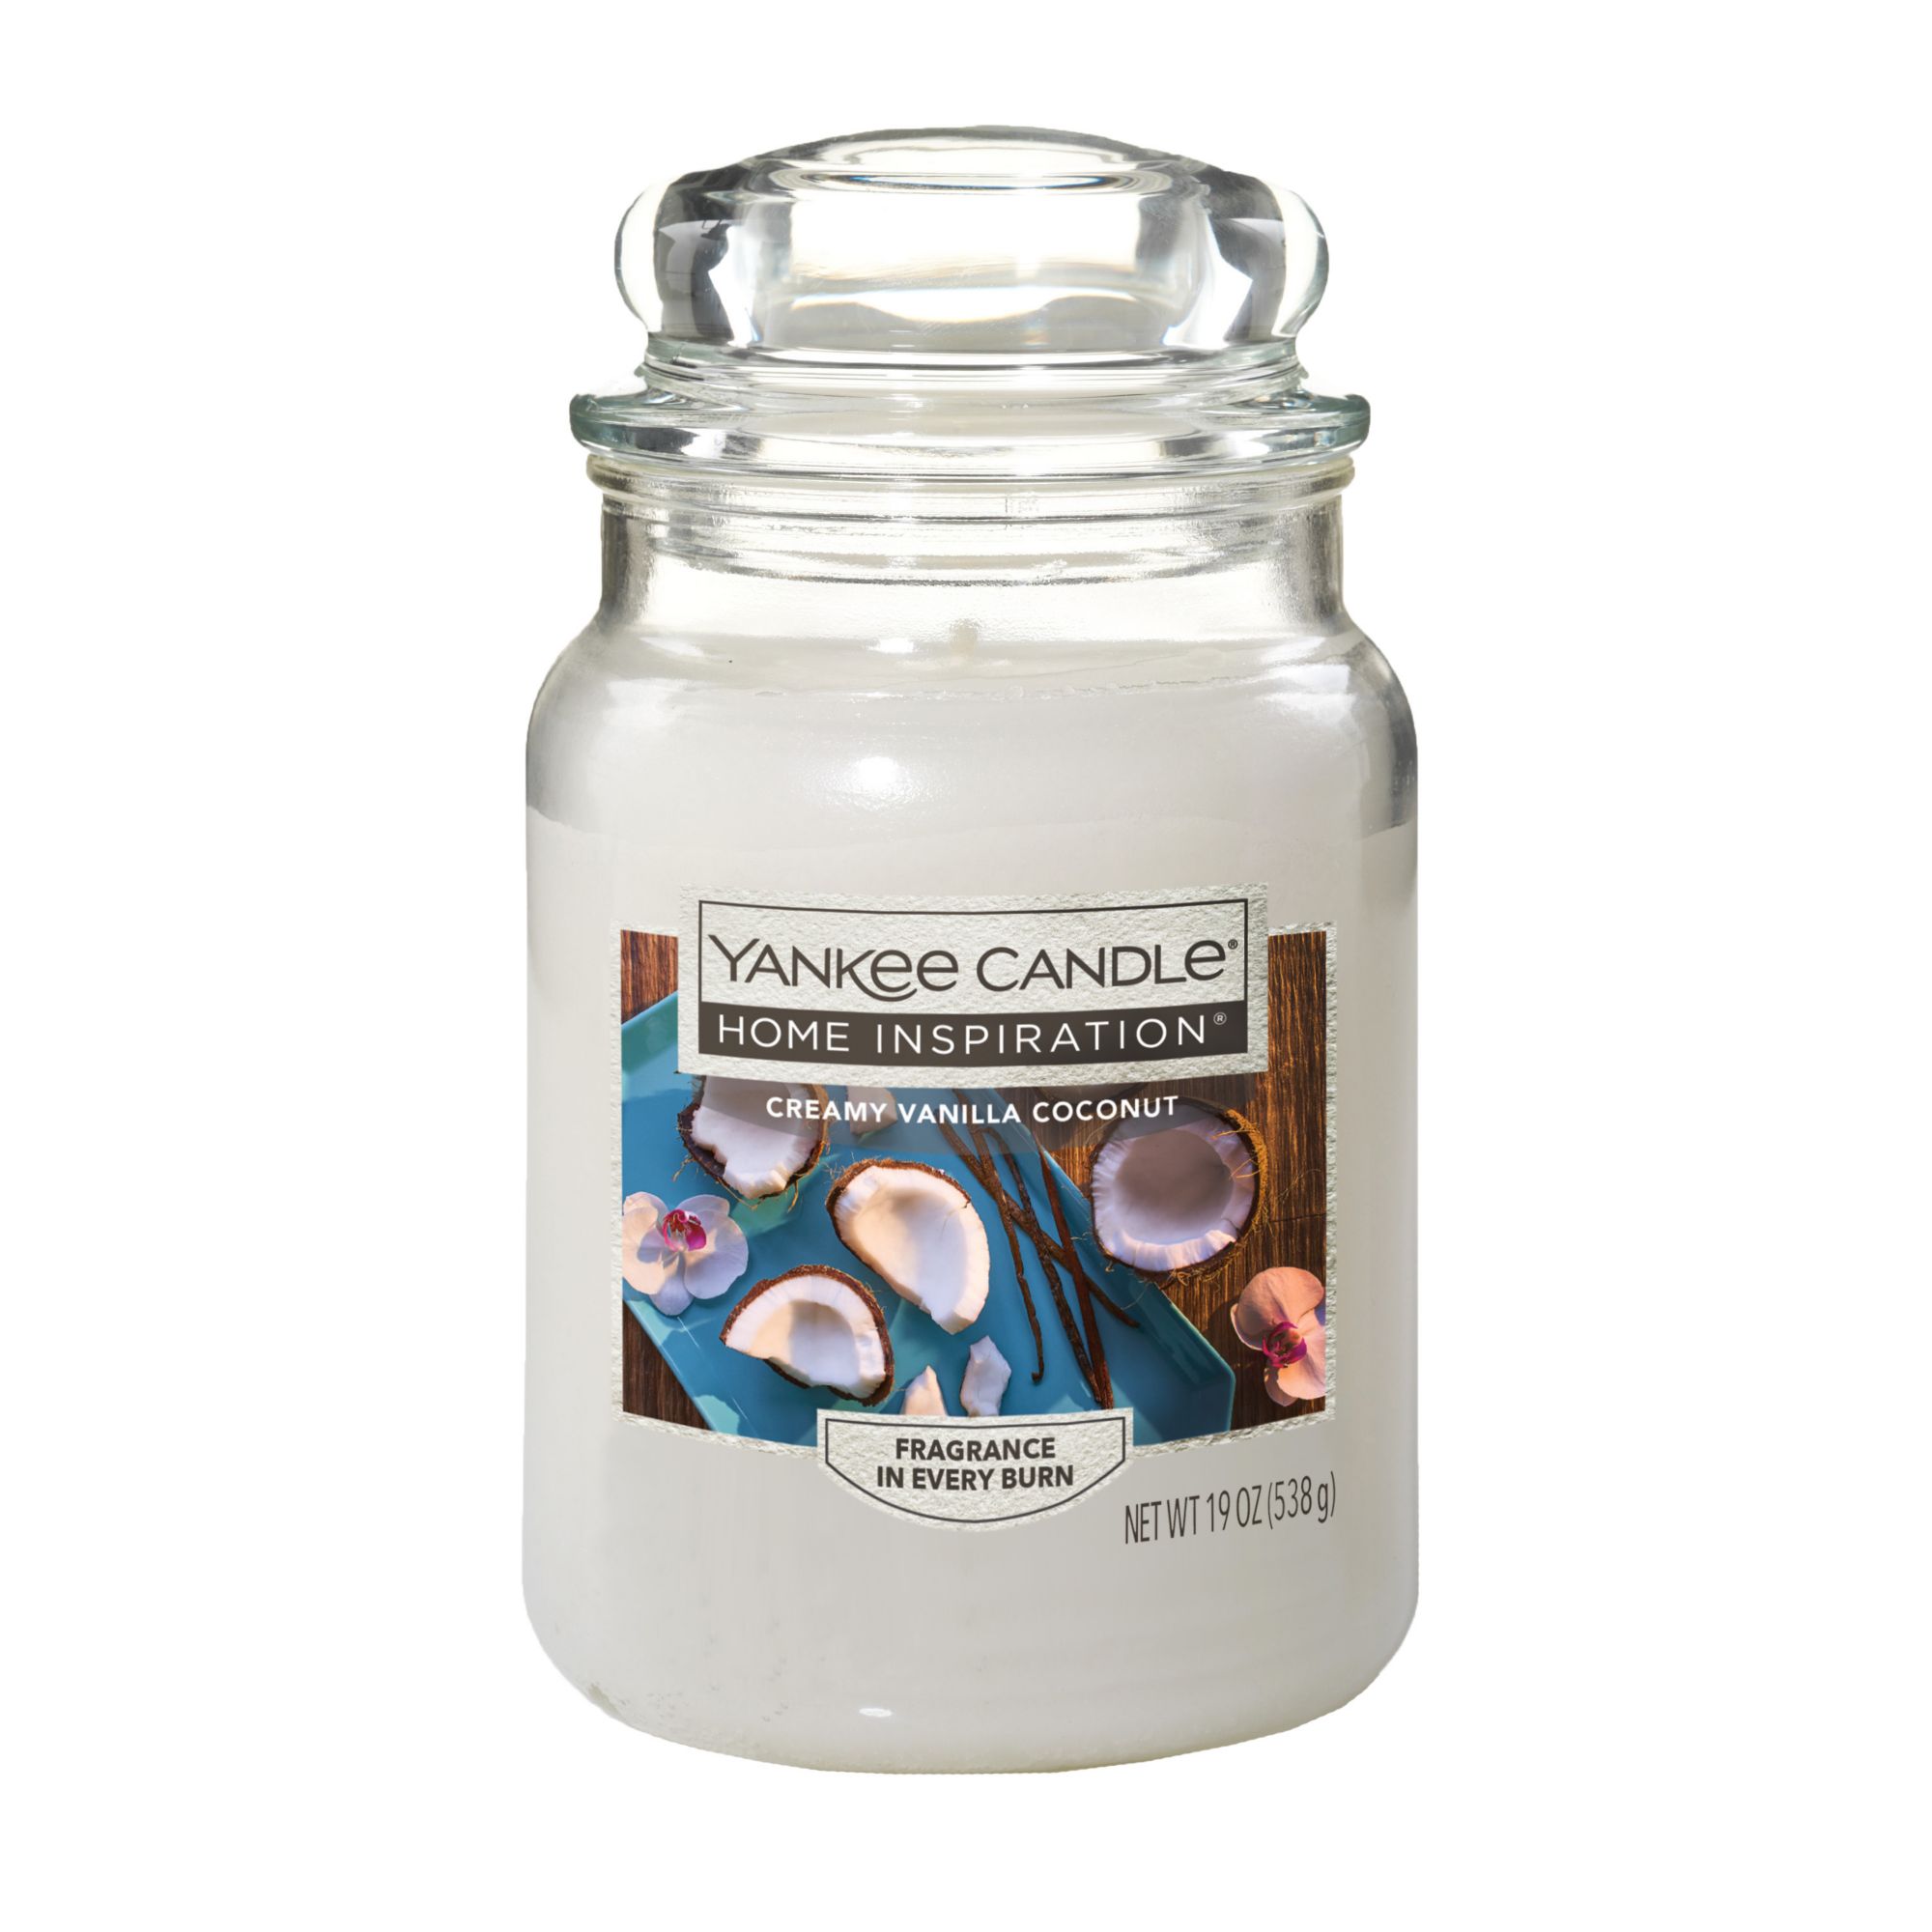 Yankee Candle - Creamy Vanilla Coconut Candle